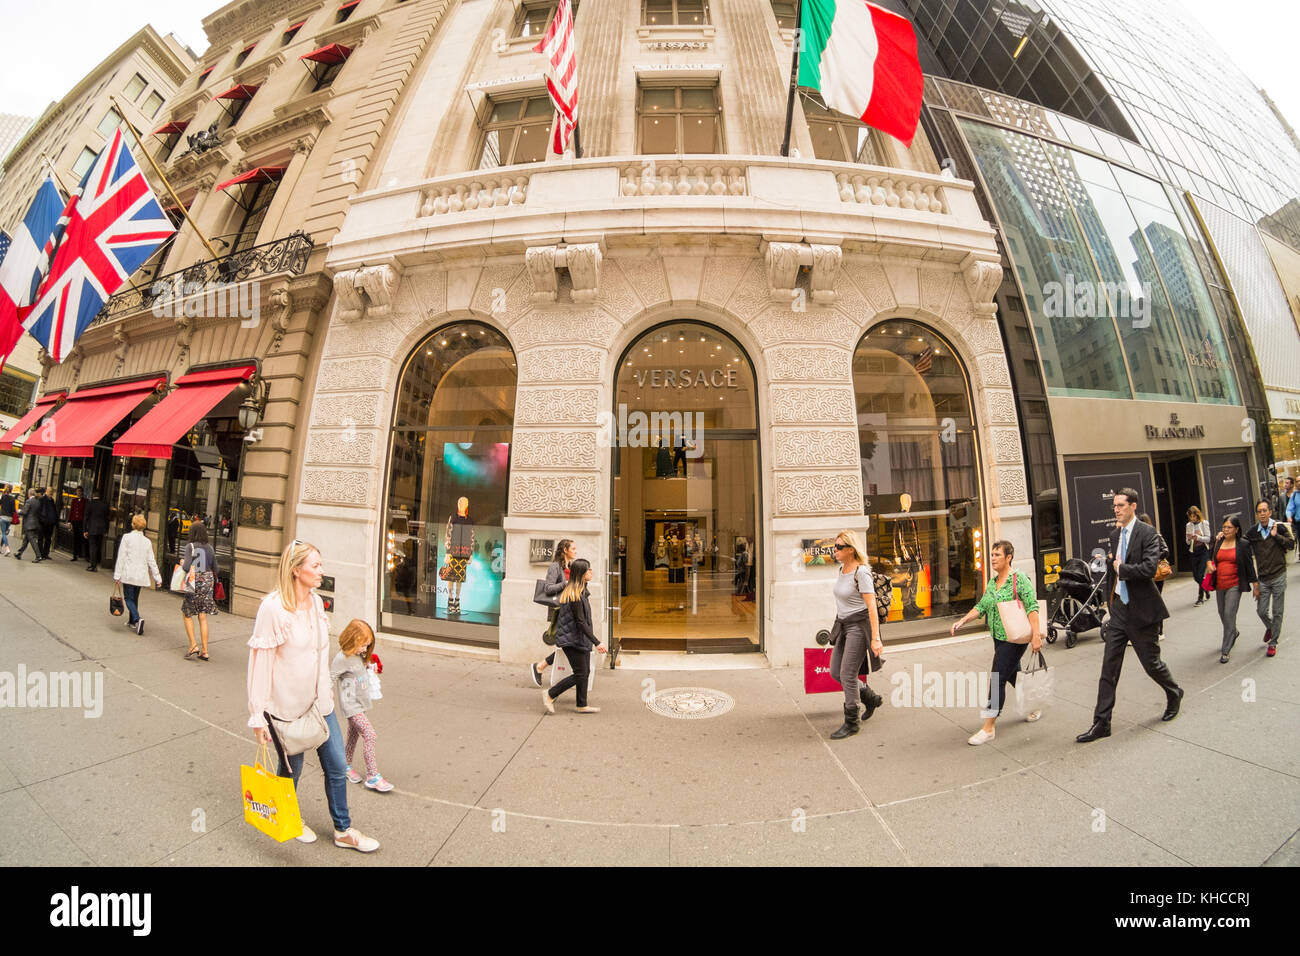 Versace shop, 5th avenue, Manhattan, New York City, United States of America. Stock Photo